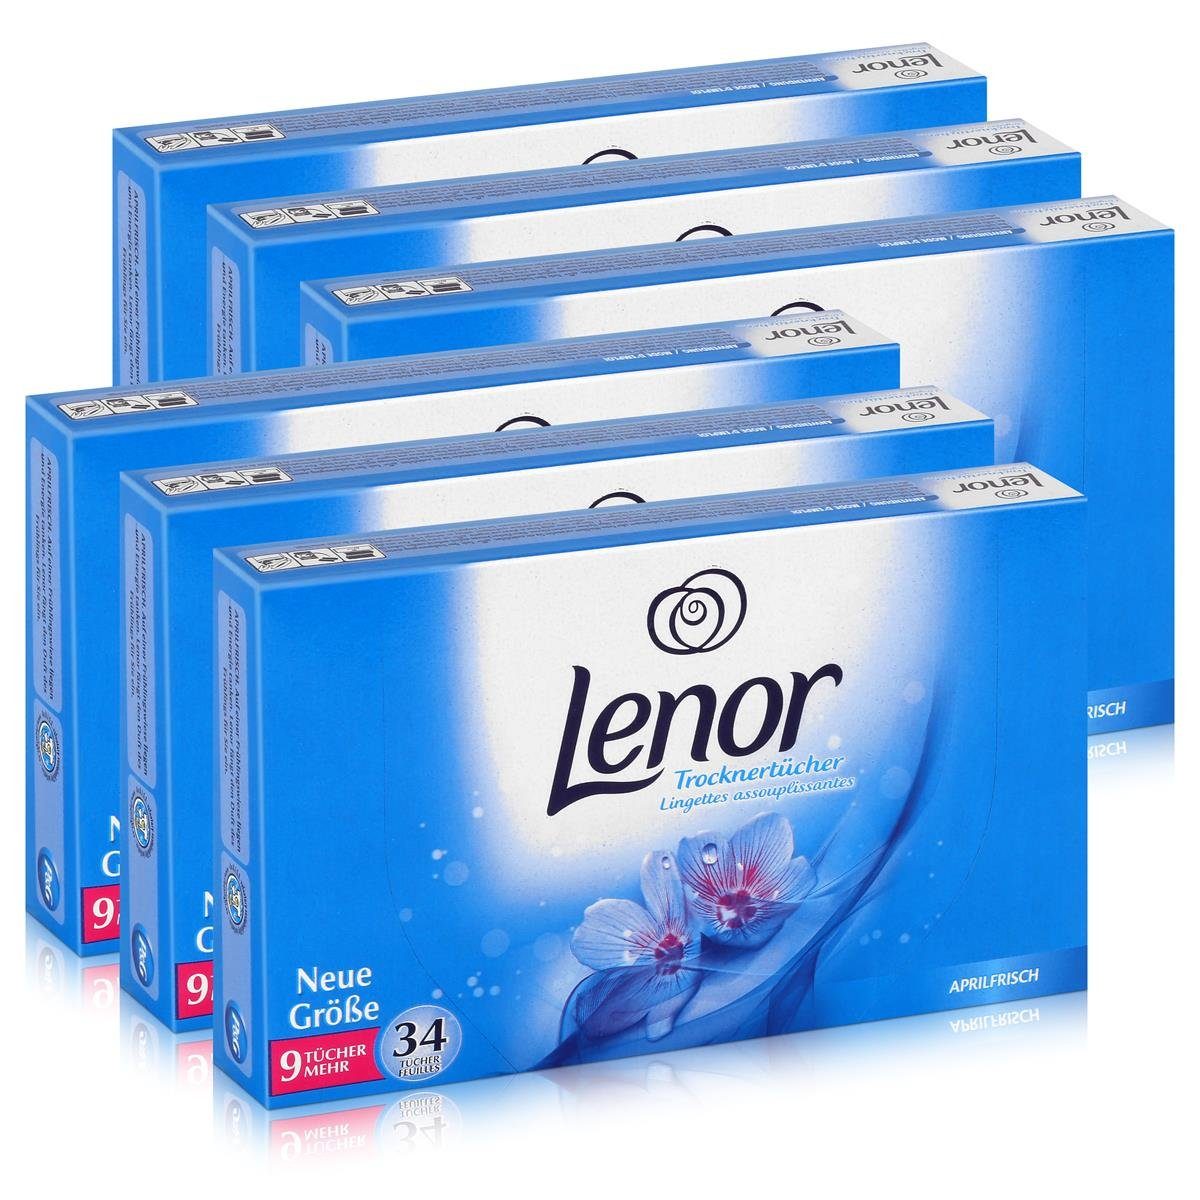 LENOR Lenor Trocknertücher Aprilfrisch 34 Tücher - im Trockner Wäschepflege Spezialwaschmittel